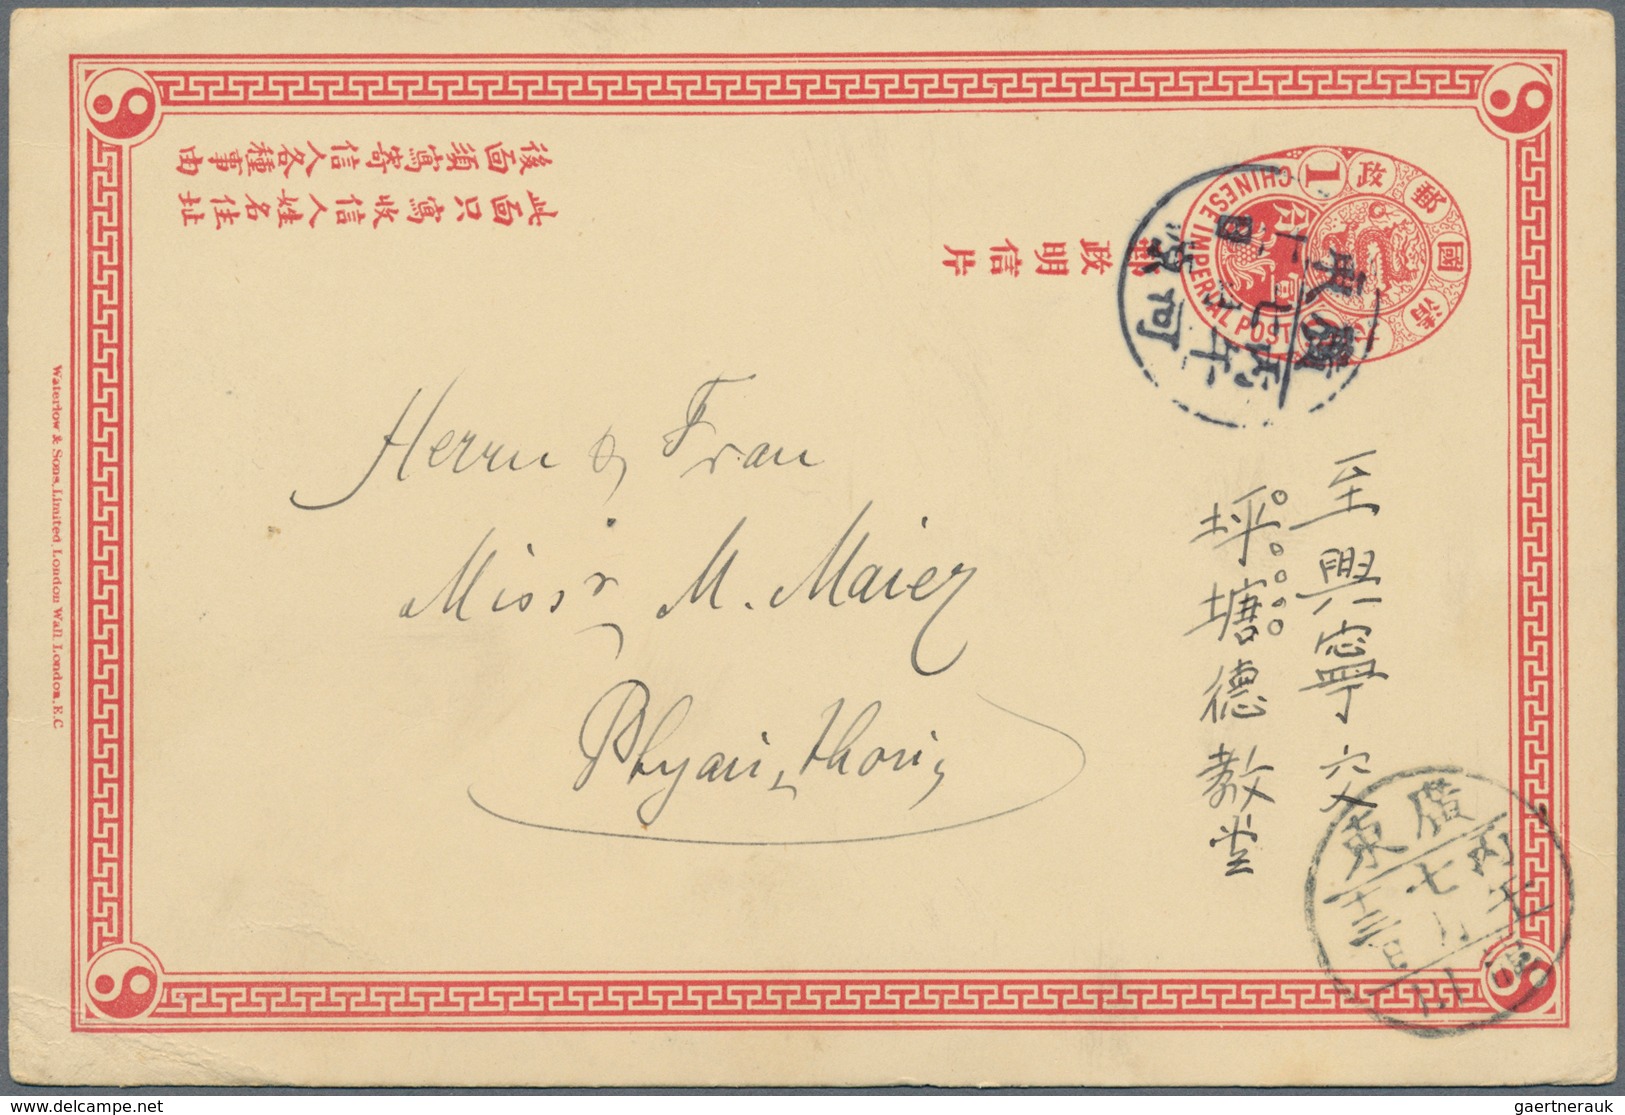 China - Ganzsachen: 1898, Card CIP 1 C. Canc. Lunar Dater Single Circle "Kwangtung Hoyün -,7.11" To - Postales